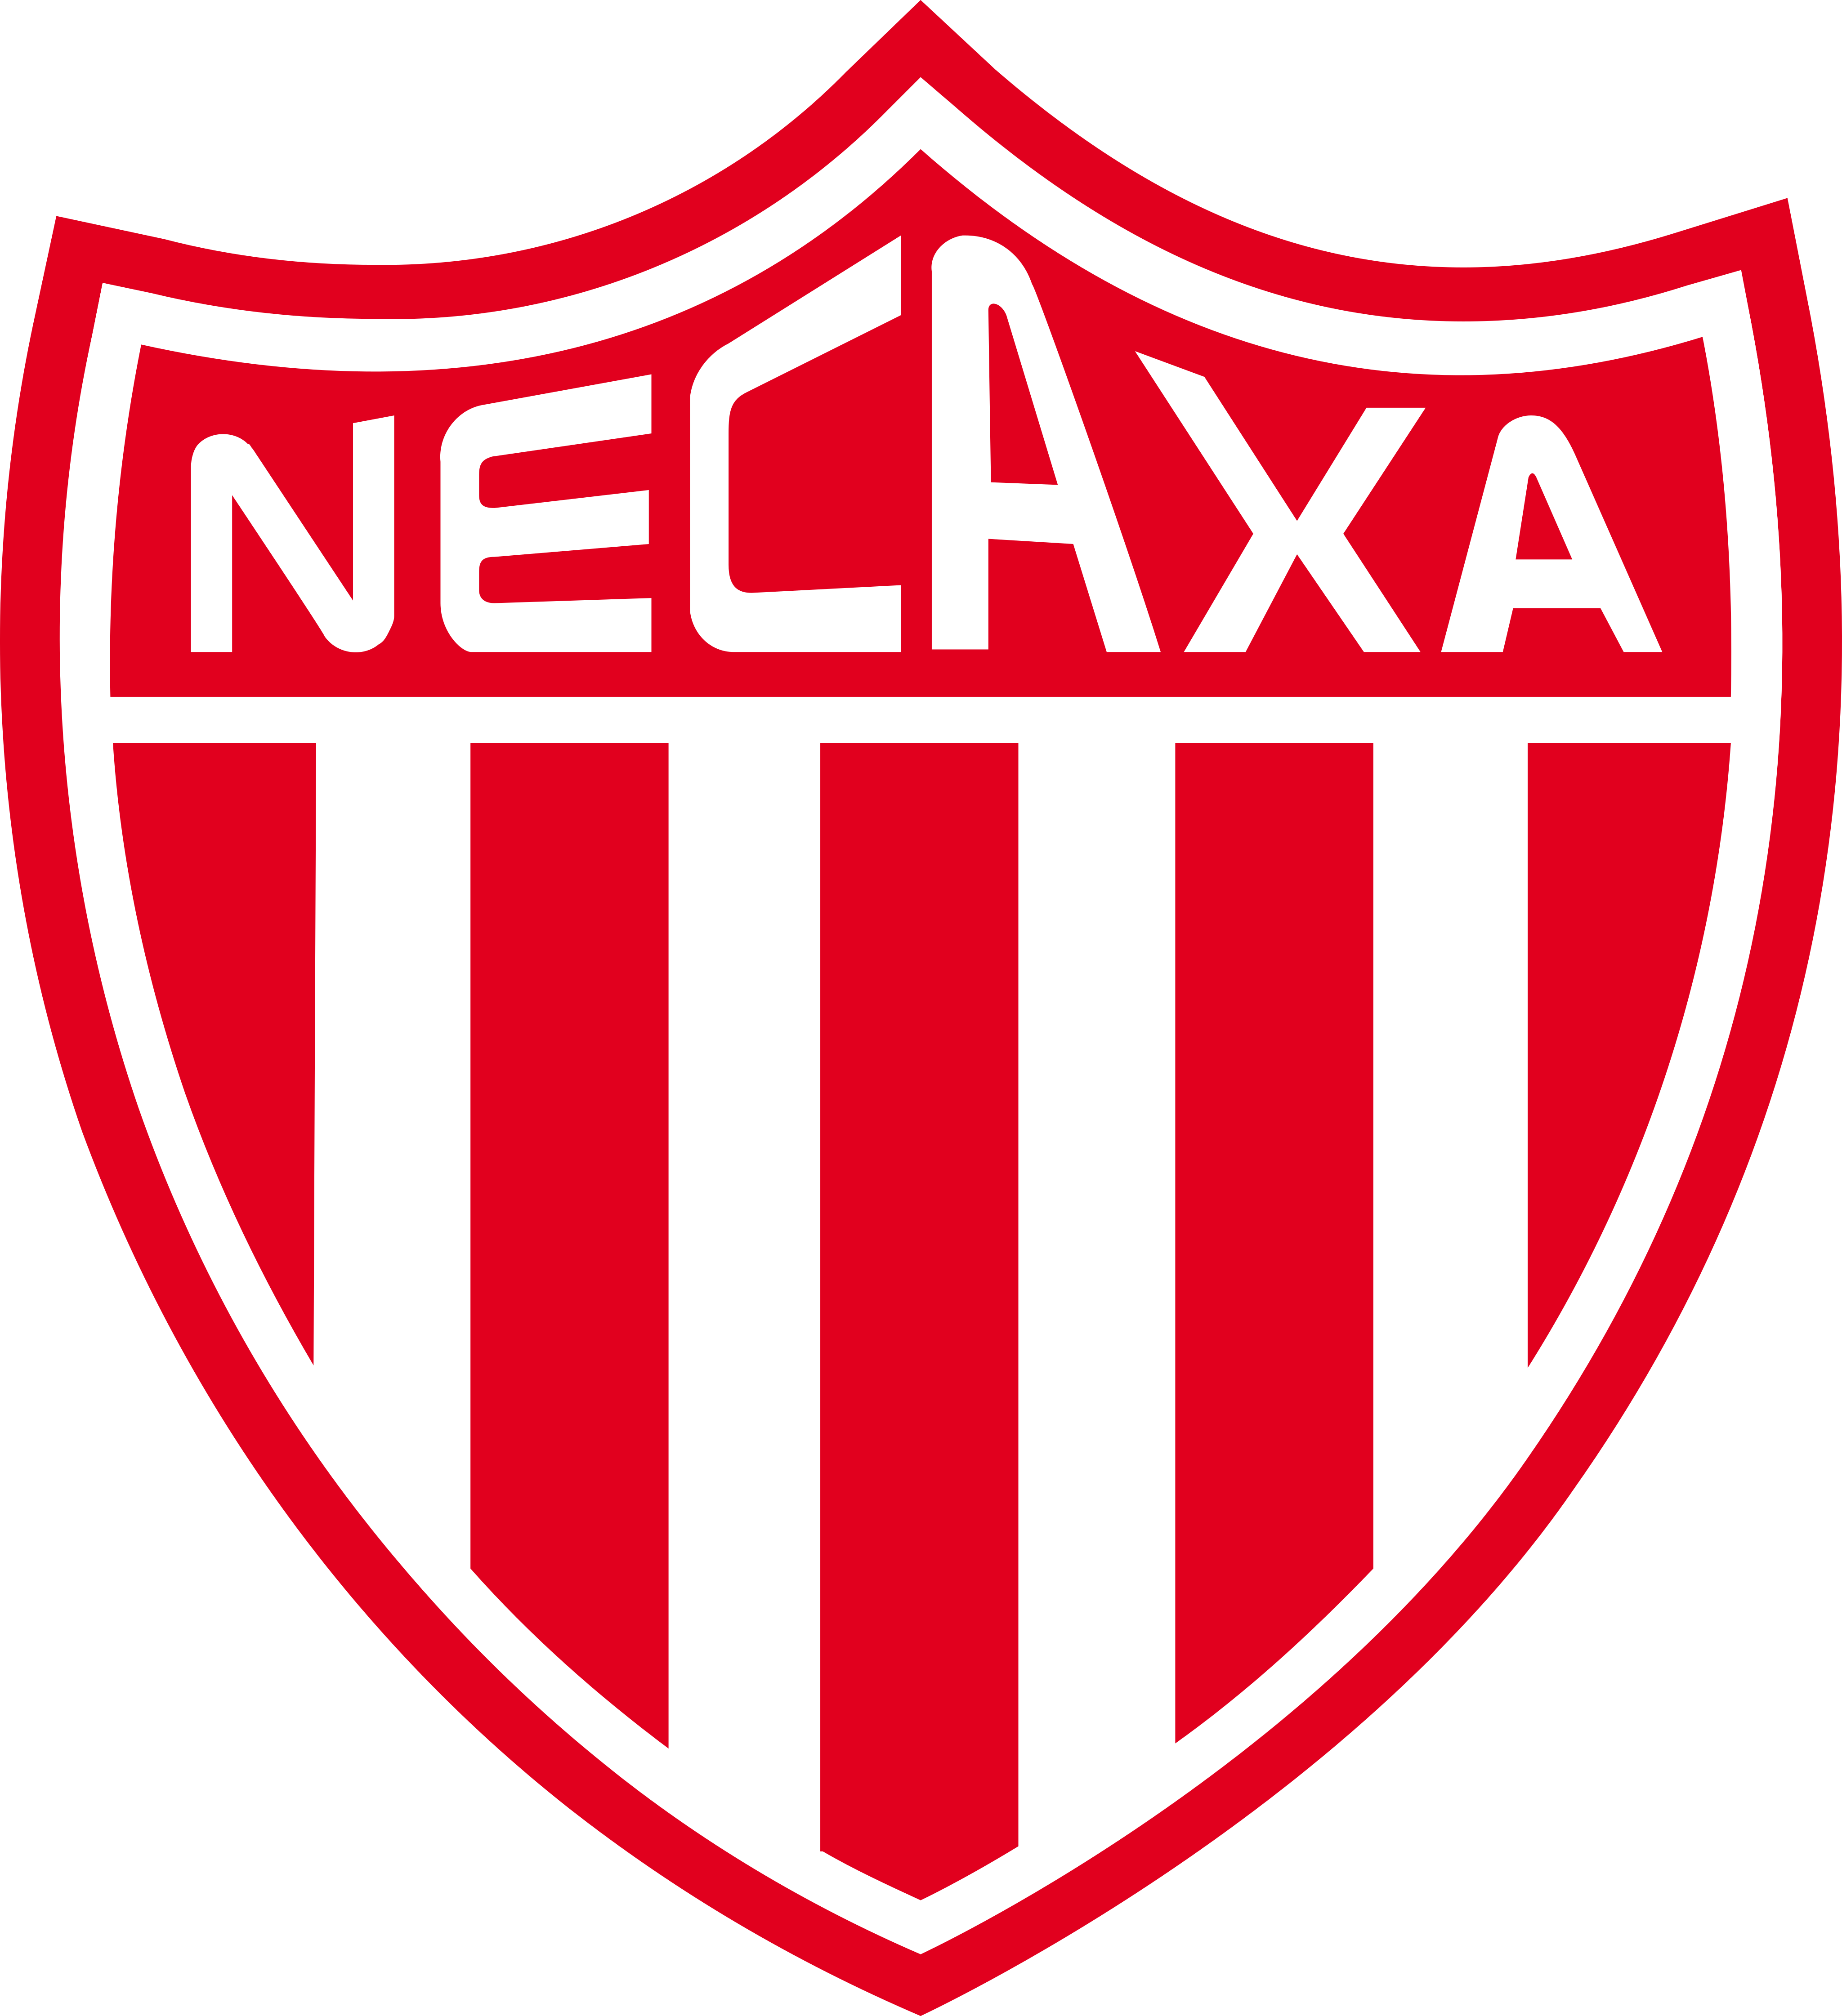 club necaxa logo - Club Necaxa Logo